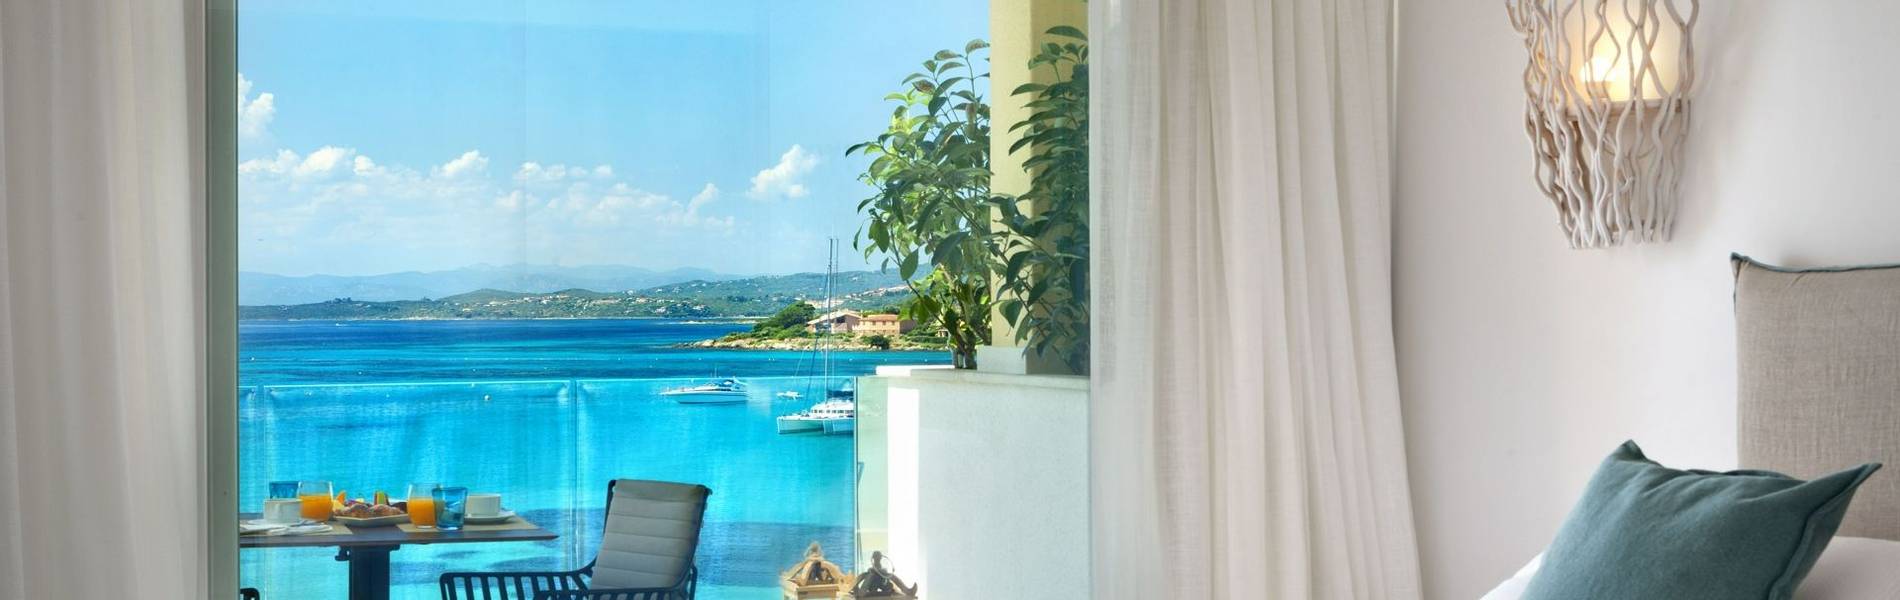 Pool Suite - Gabbiano Azzurro Hotel Sardinia2.jpg